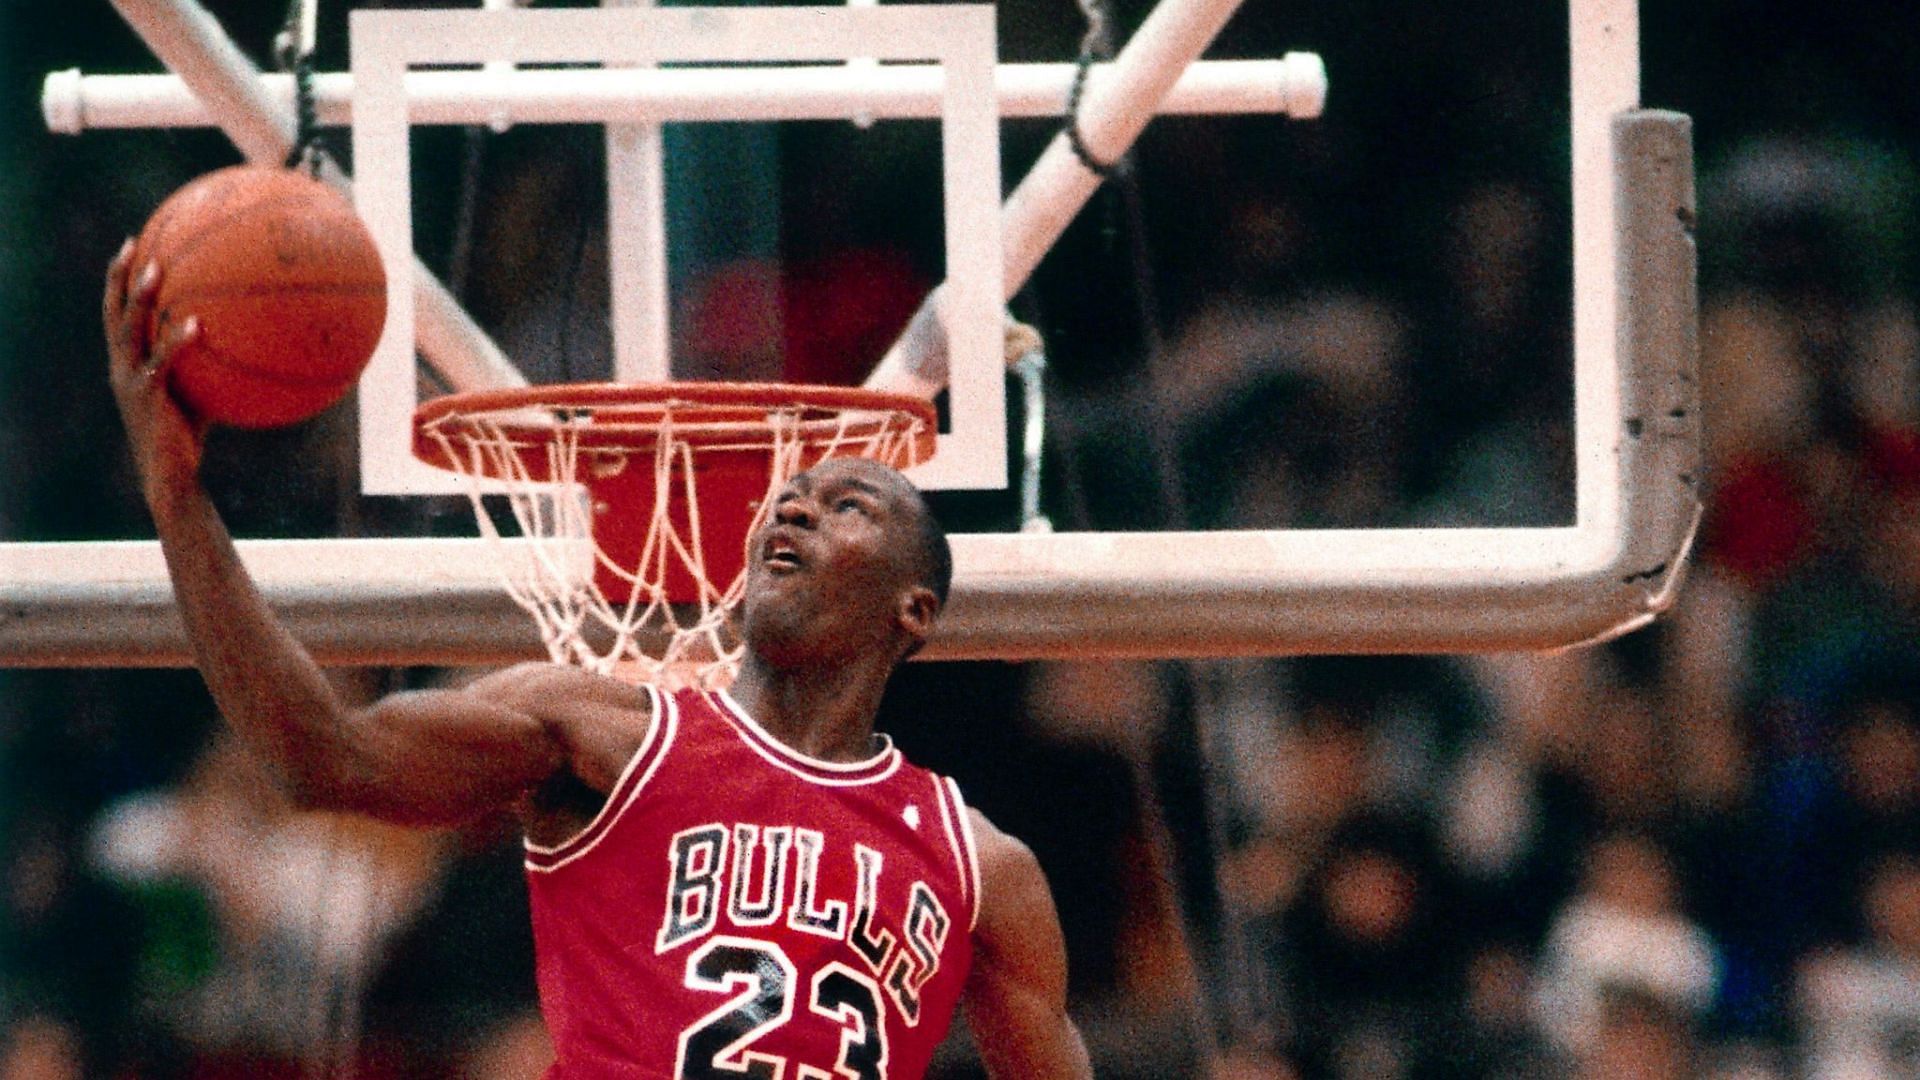 Michael Jordan in action for the Chicago Bulls in 1988.